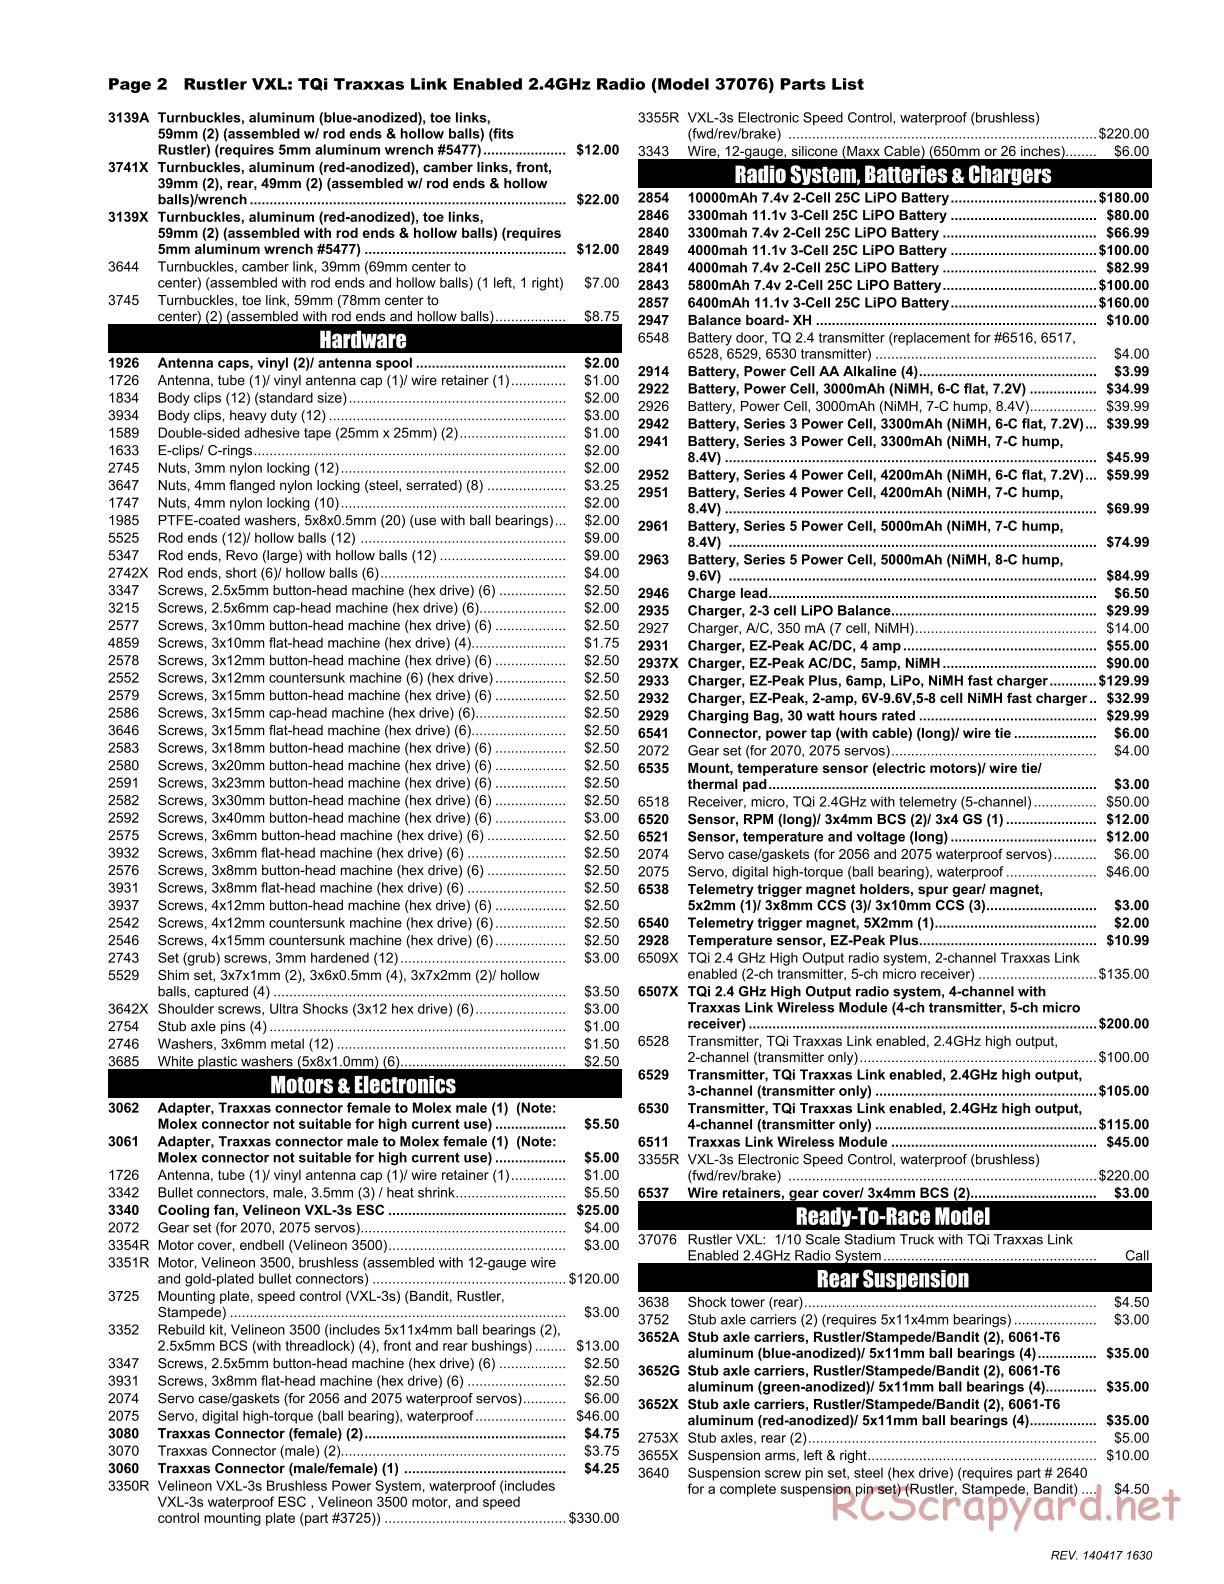 Traxxas - Rustler VXL (2014) - Parts List - Page 2